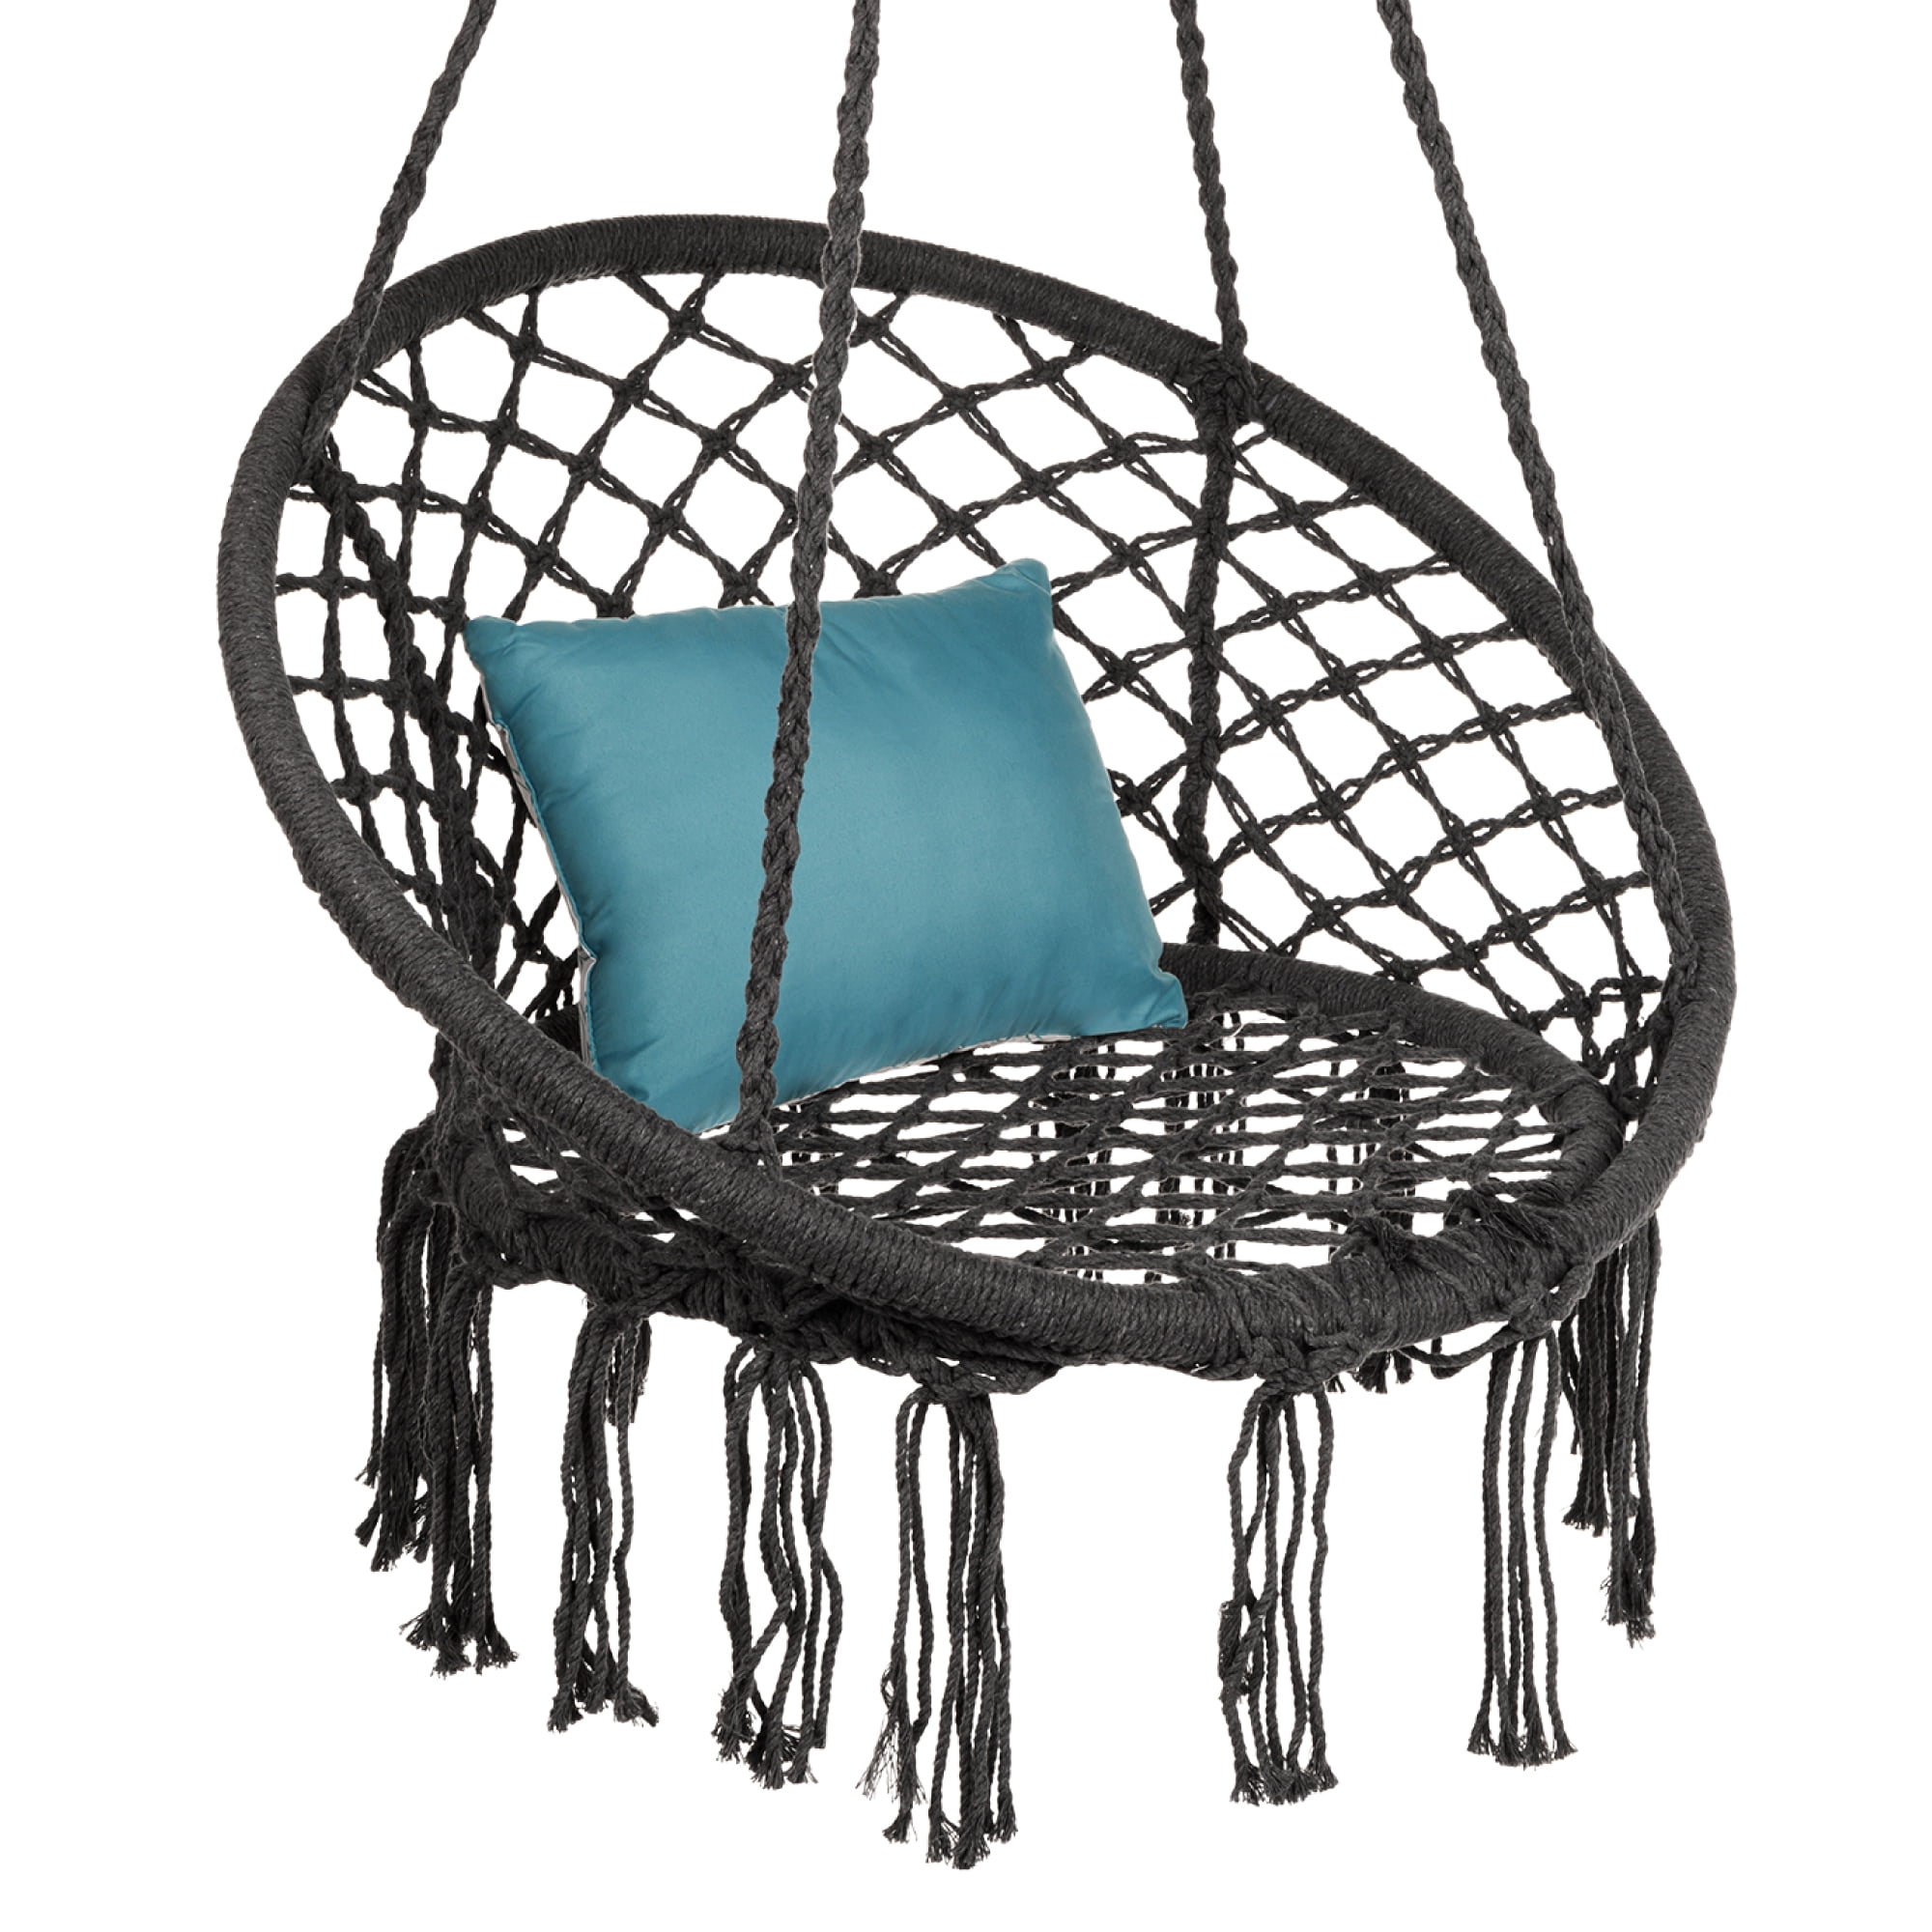 Hammock chair flower crochet handmade cotton/Bedroom hanging chair/ Fast deliver 